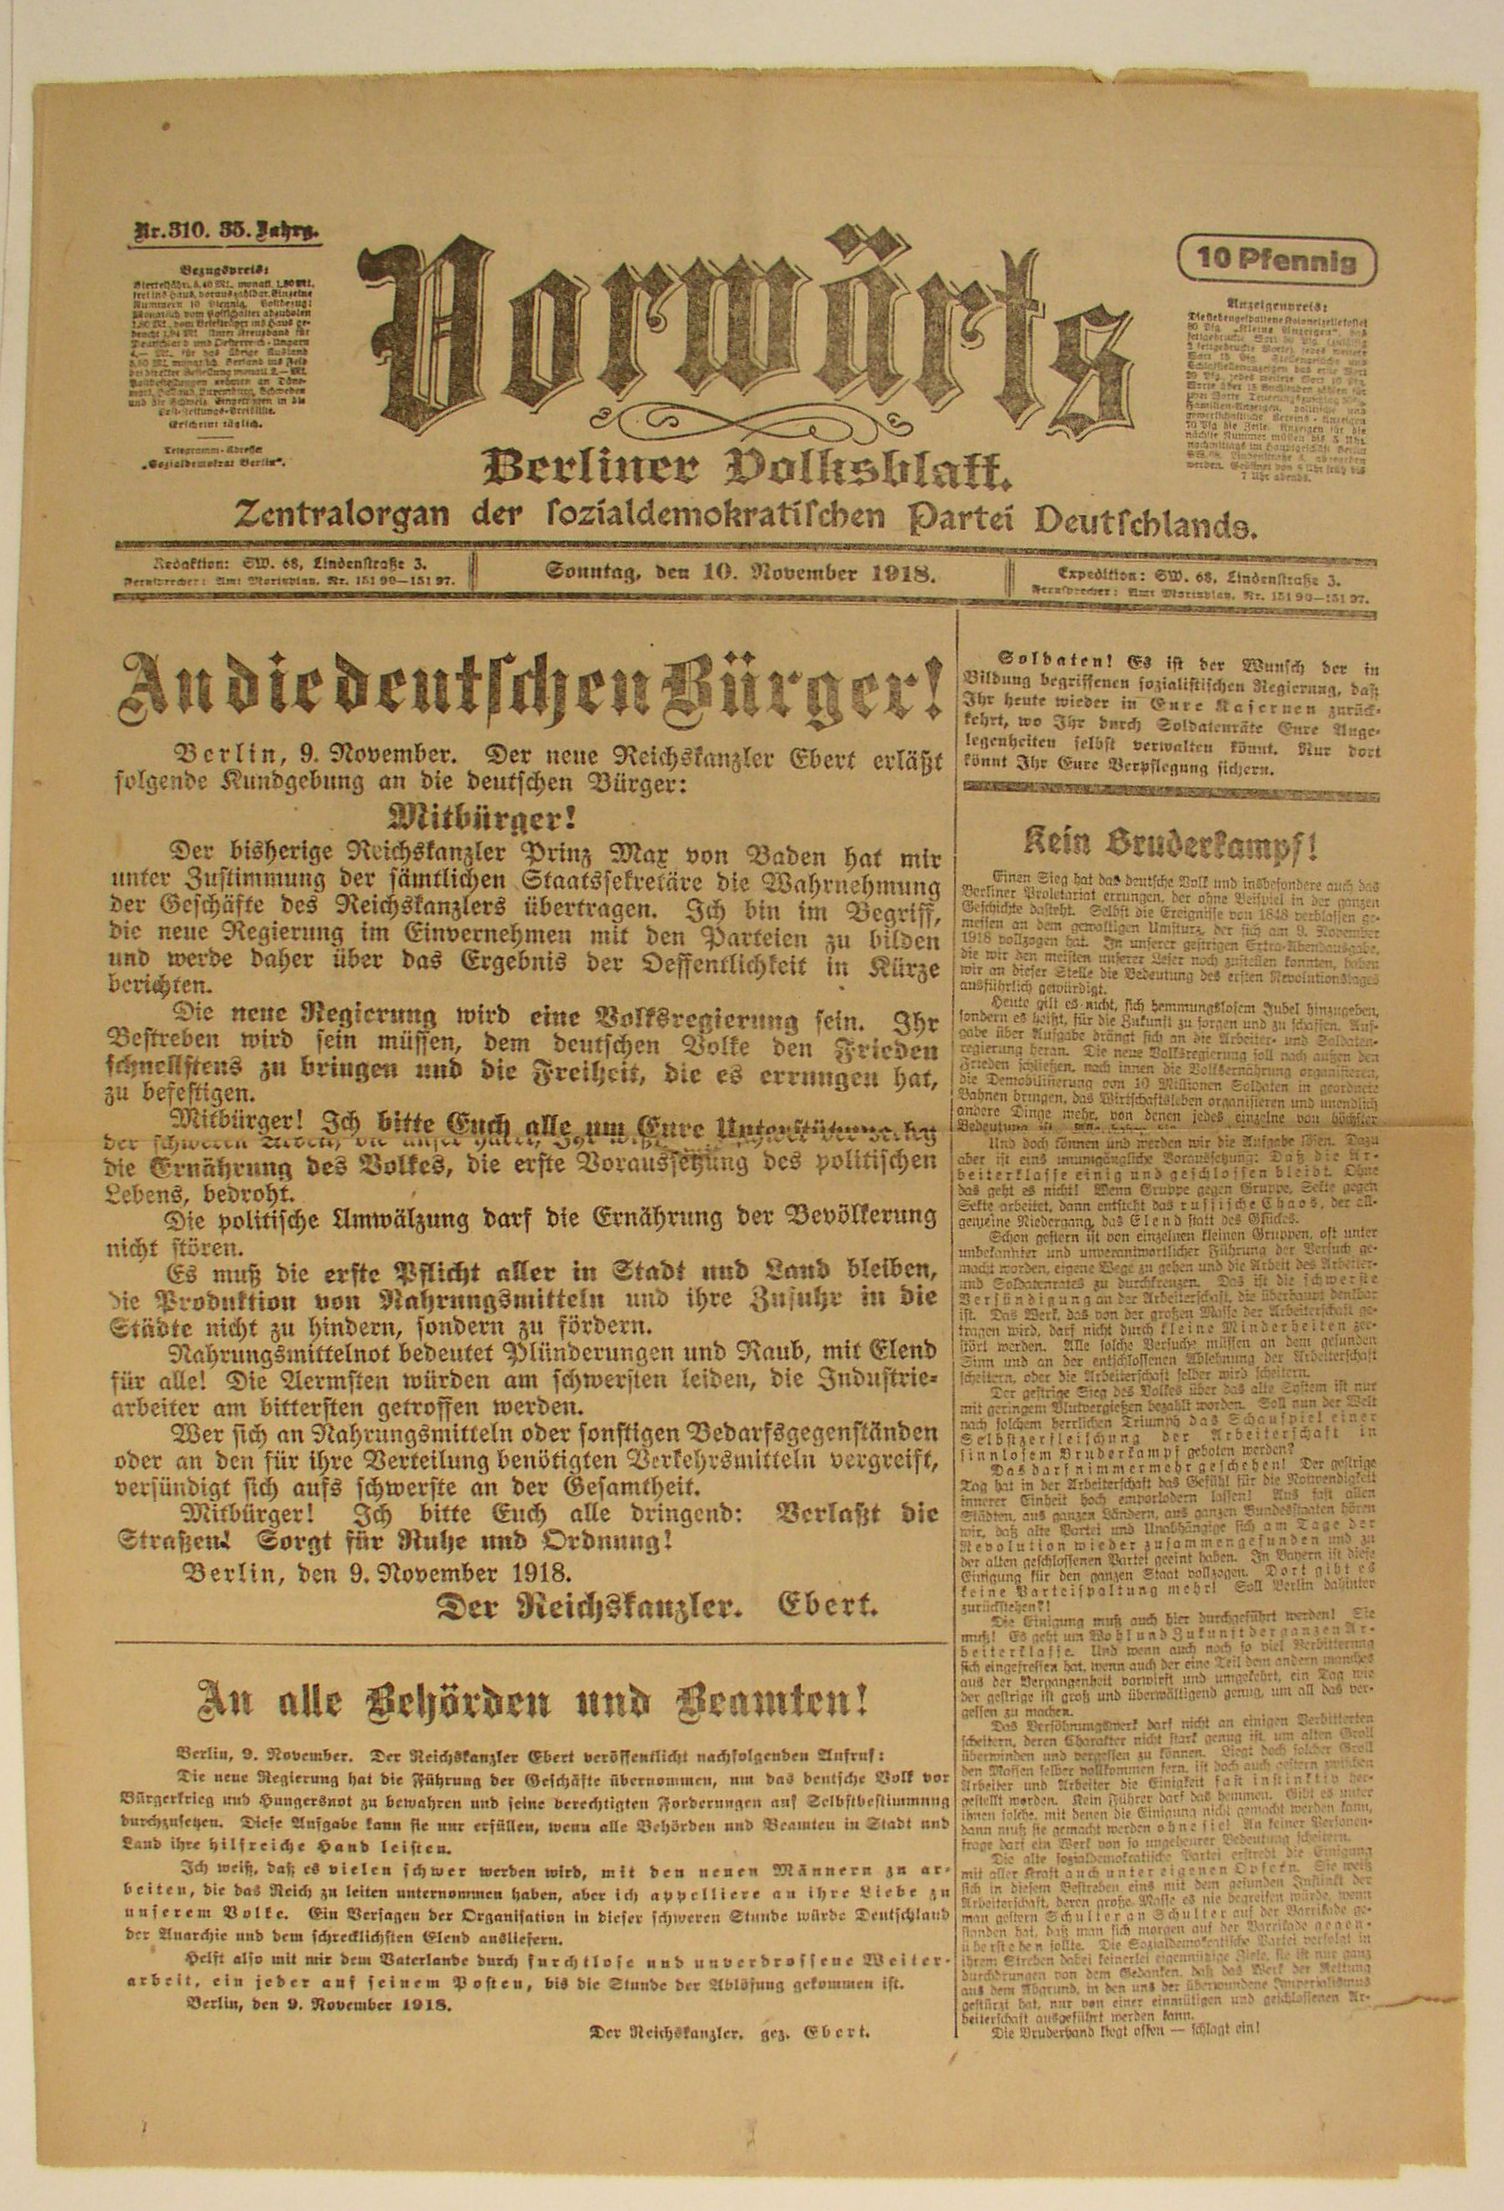 Vorwärts, 10. November 1918